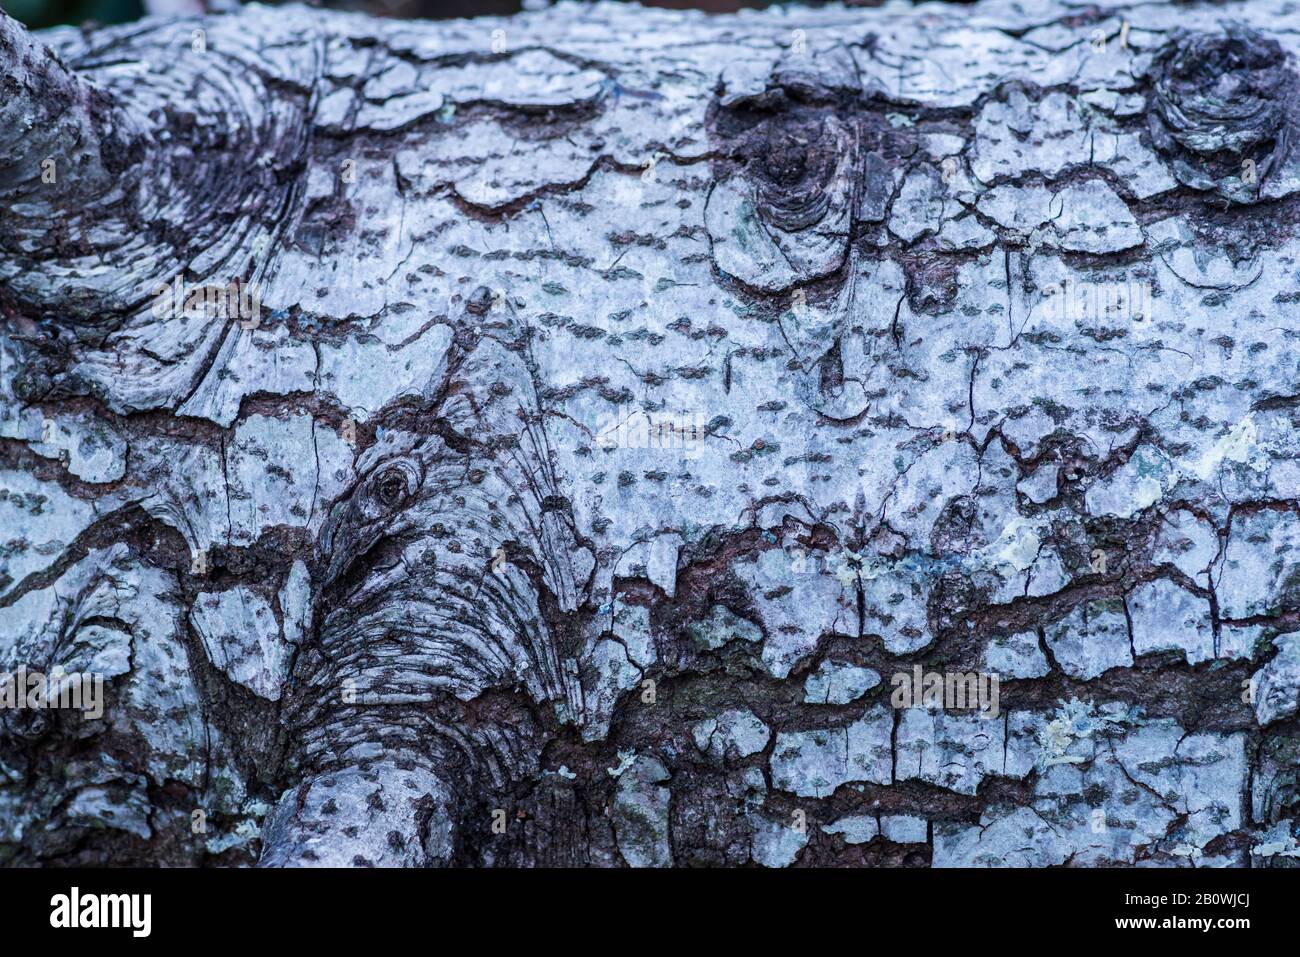 Natural Park of Montseny,tree trunk Abies pinsapo, Barcelona, Spain, Europe. Stock Photo